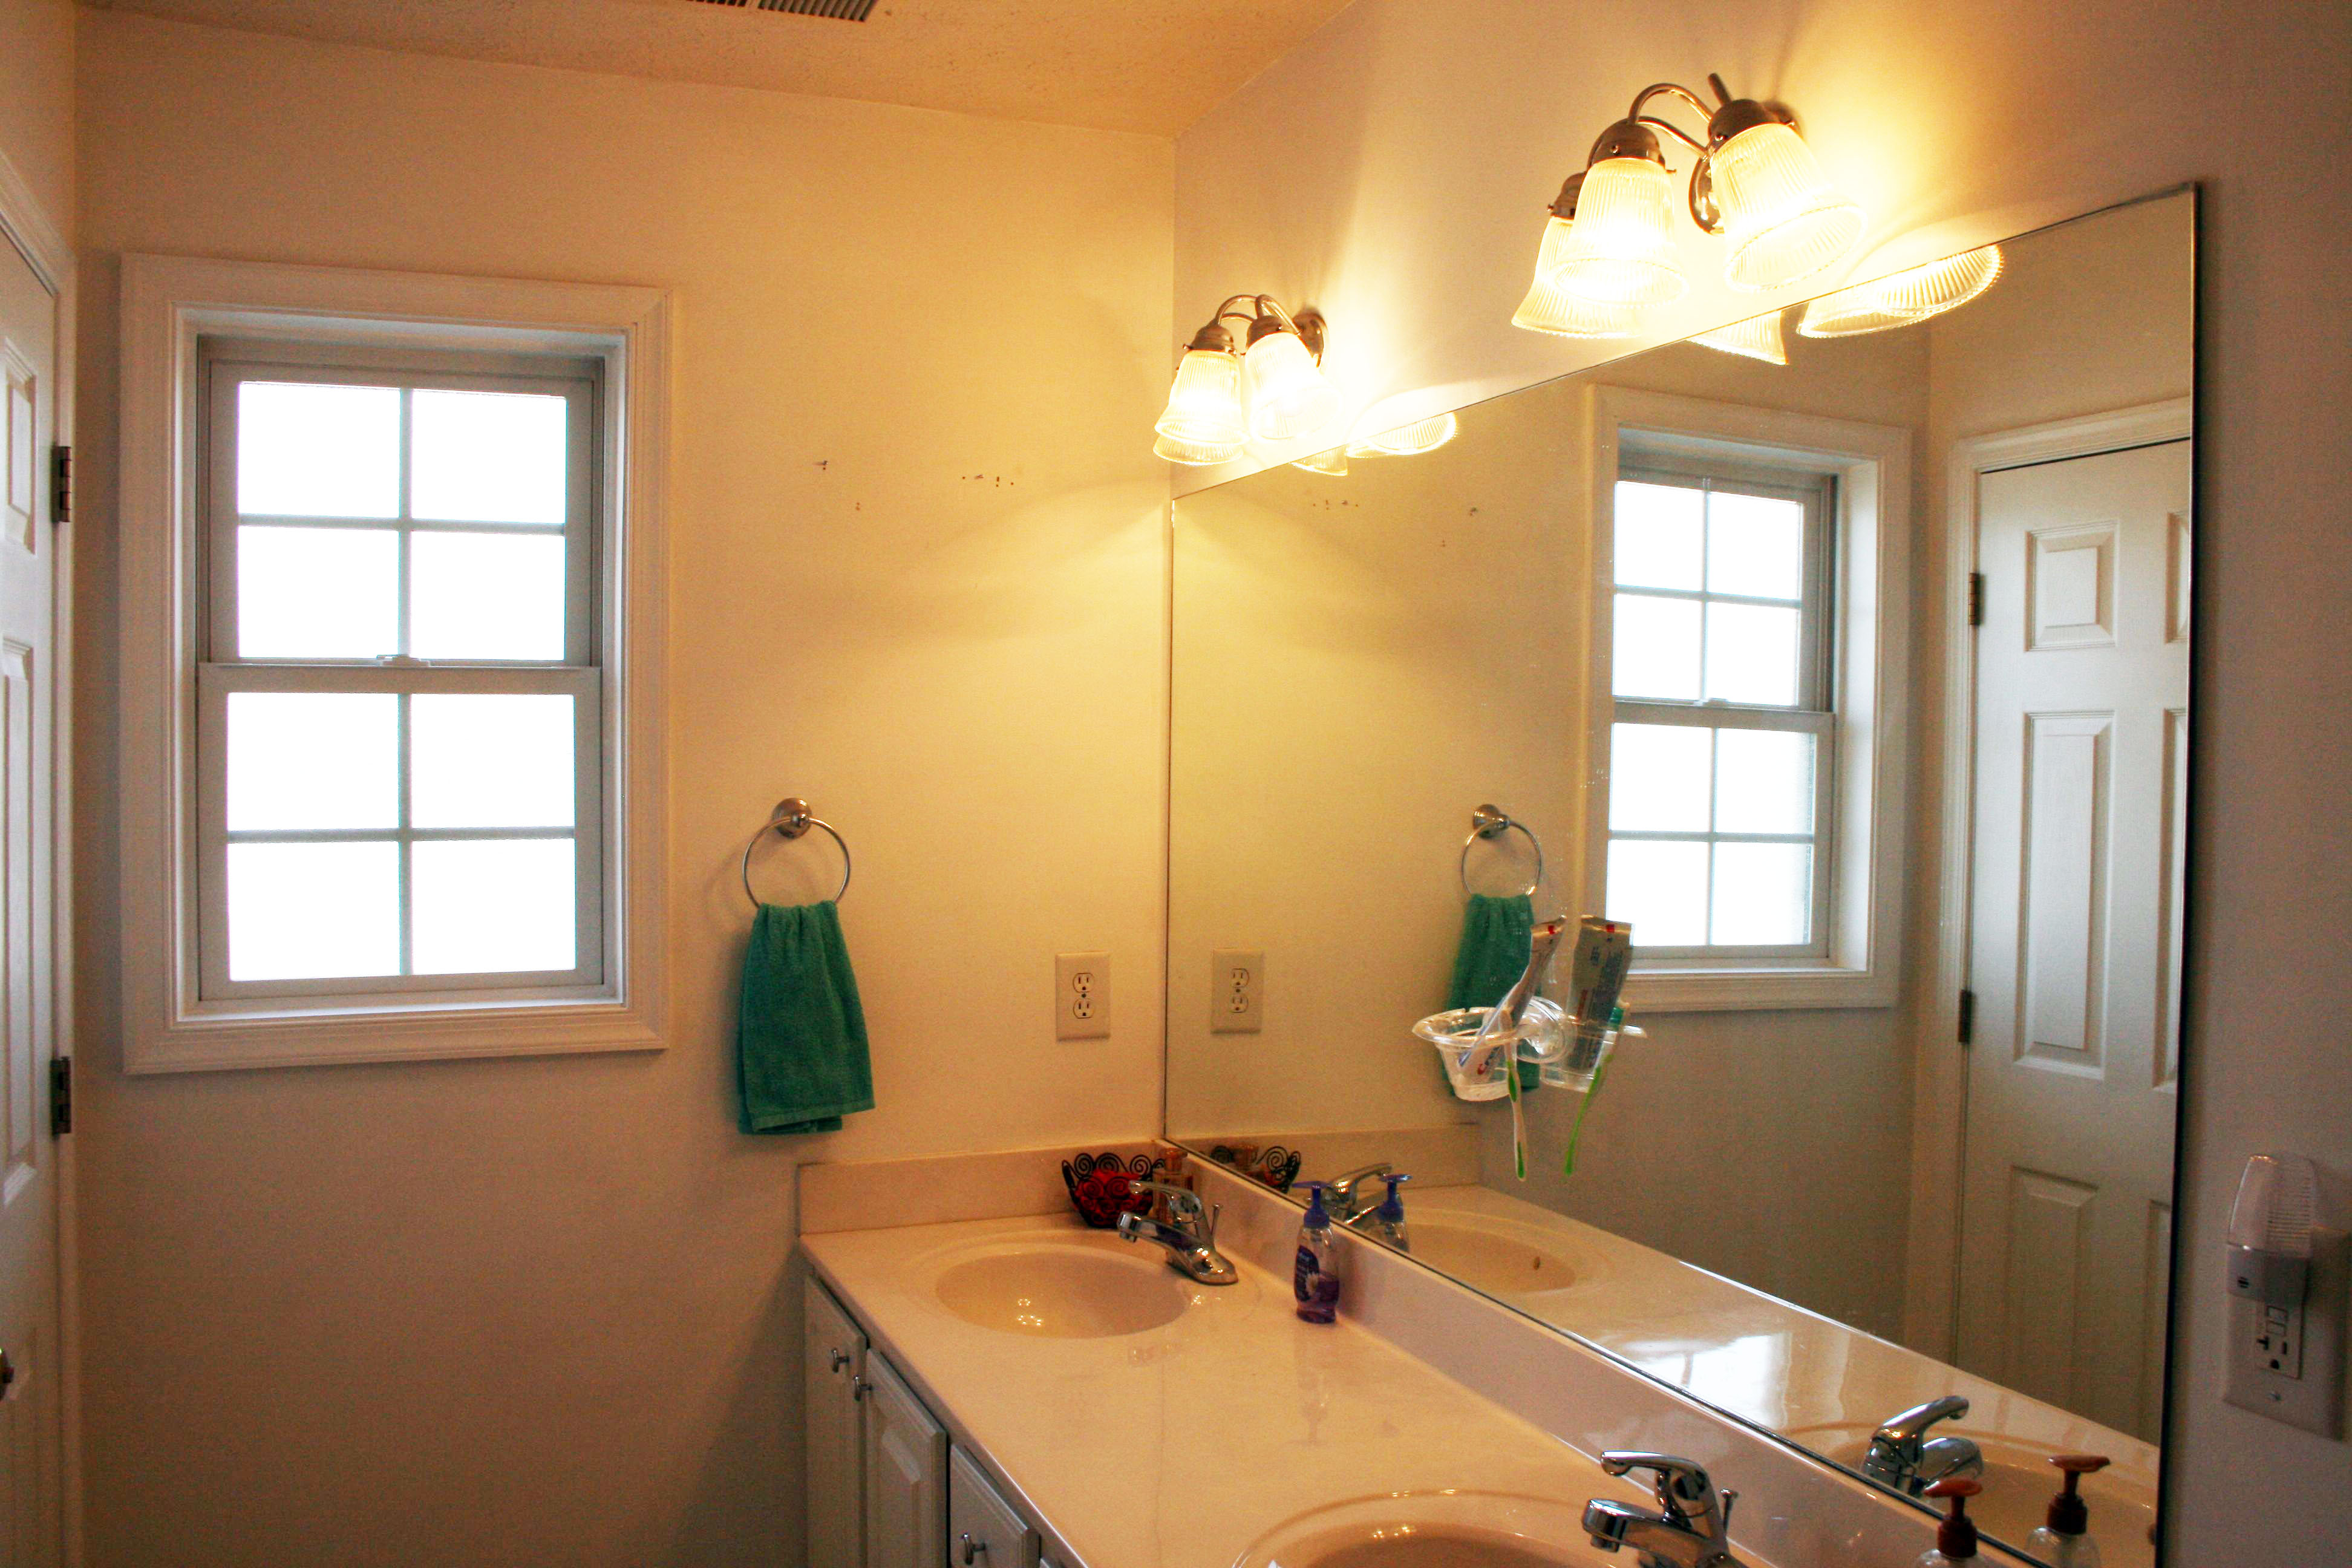 Updating The Bathroom Light Fixture, How To Replace Vanity Light Socket